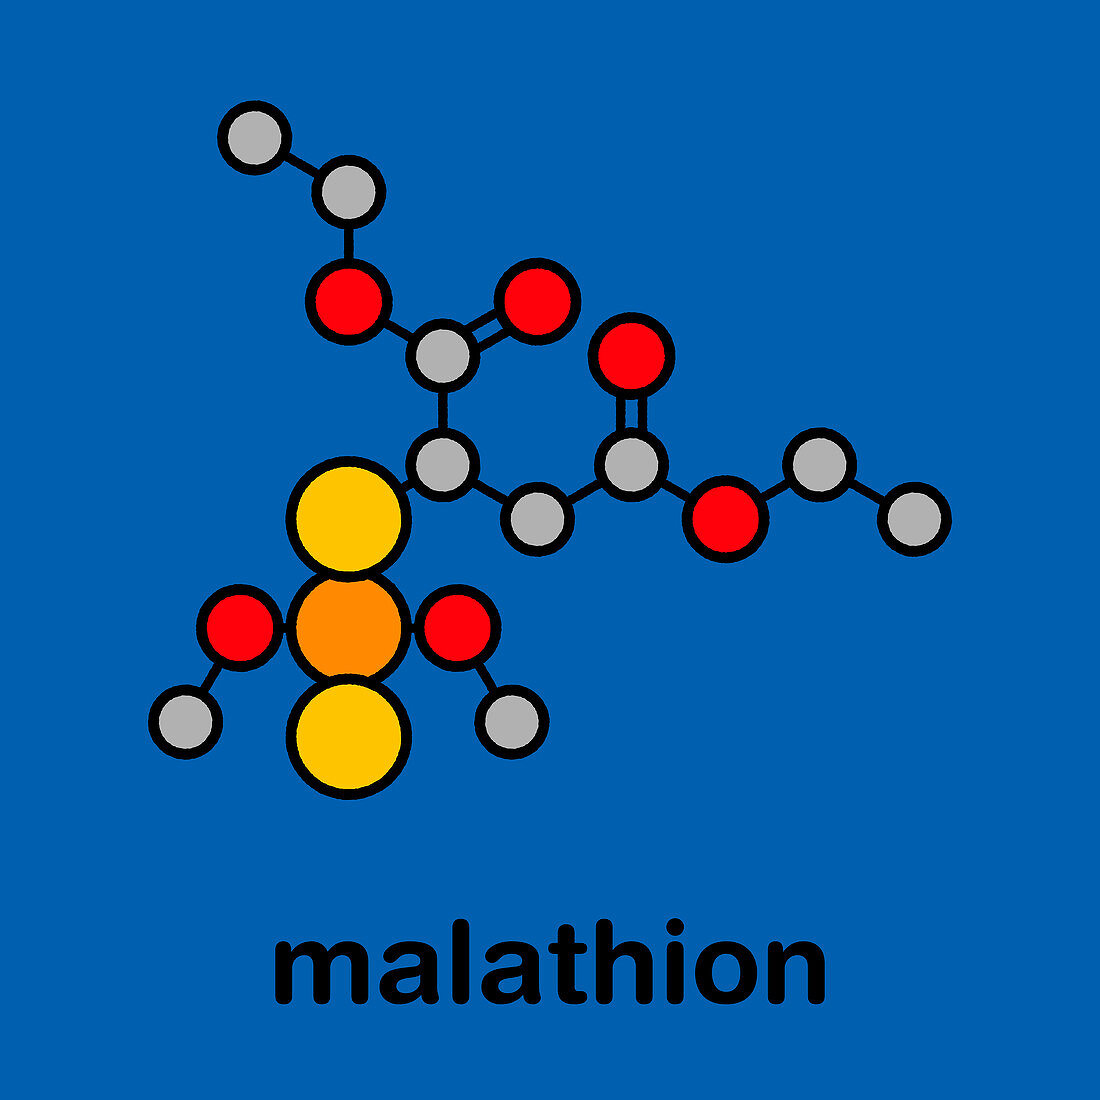 Malathion insecticide, molecular model